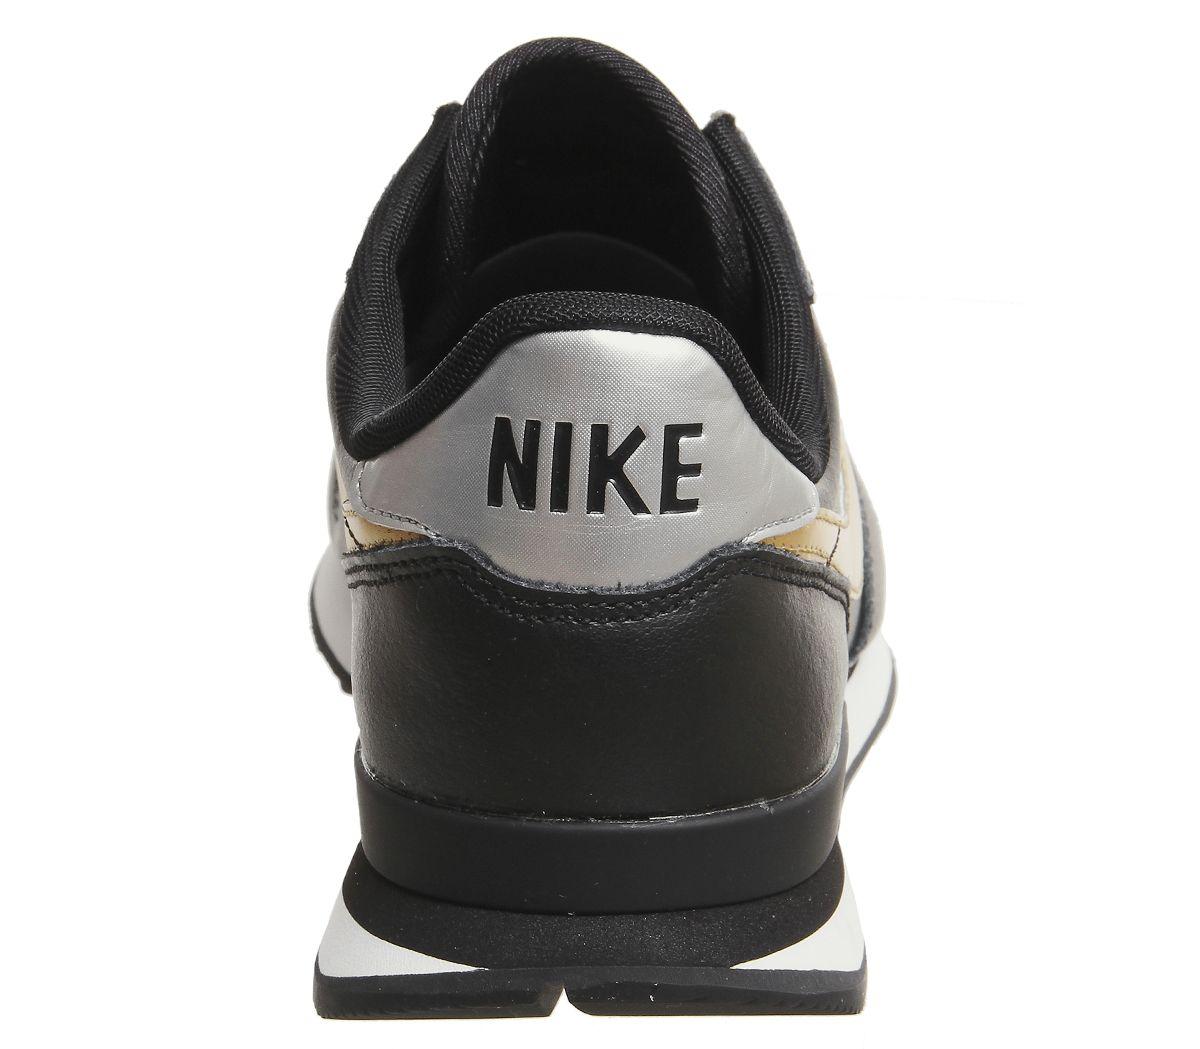 nike black and gold internationalist sneakers